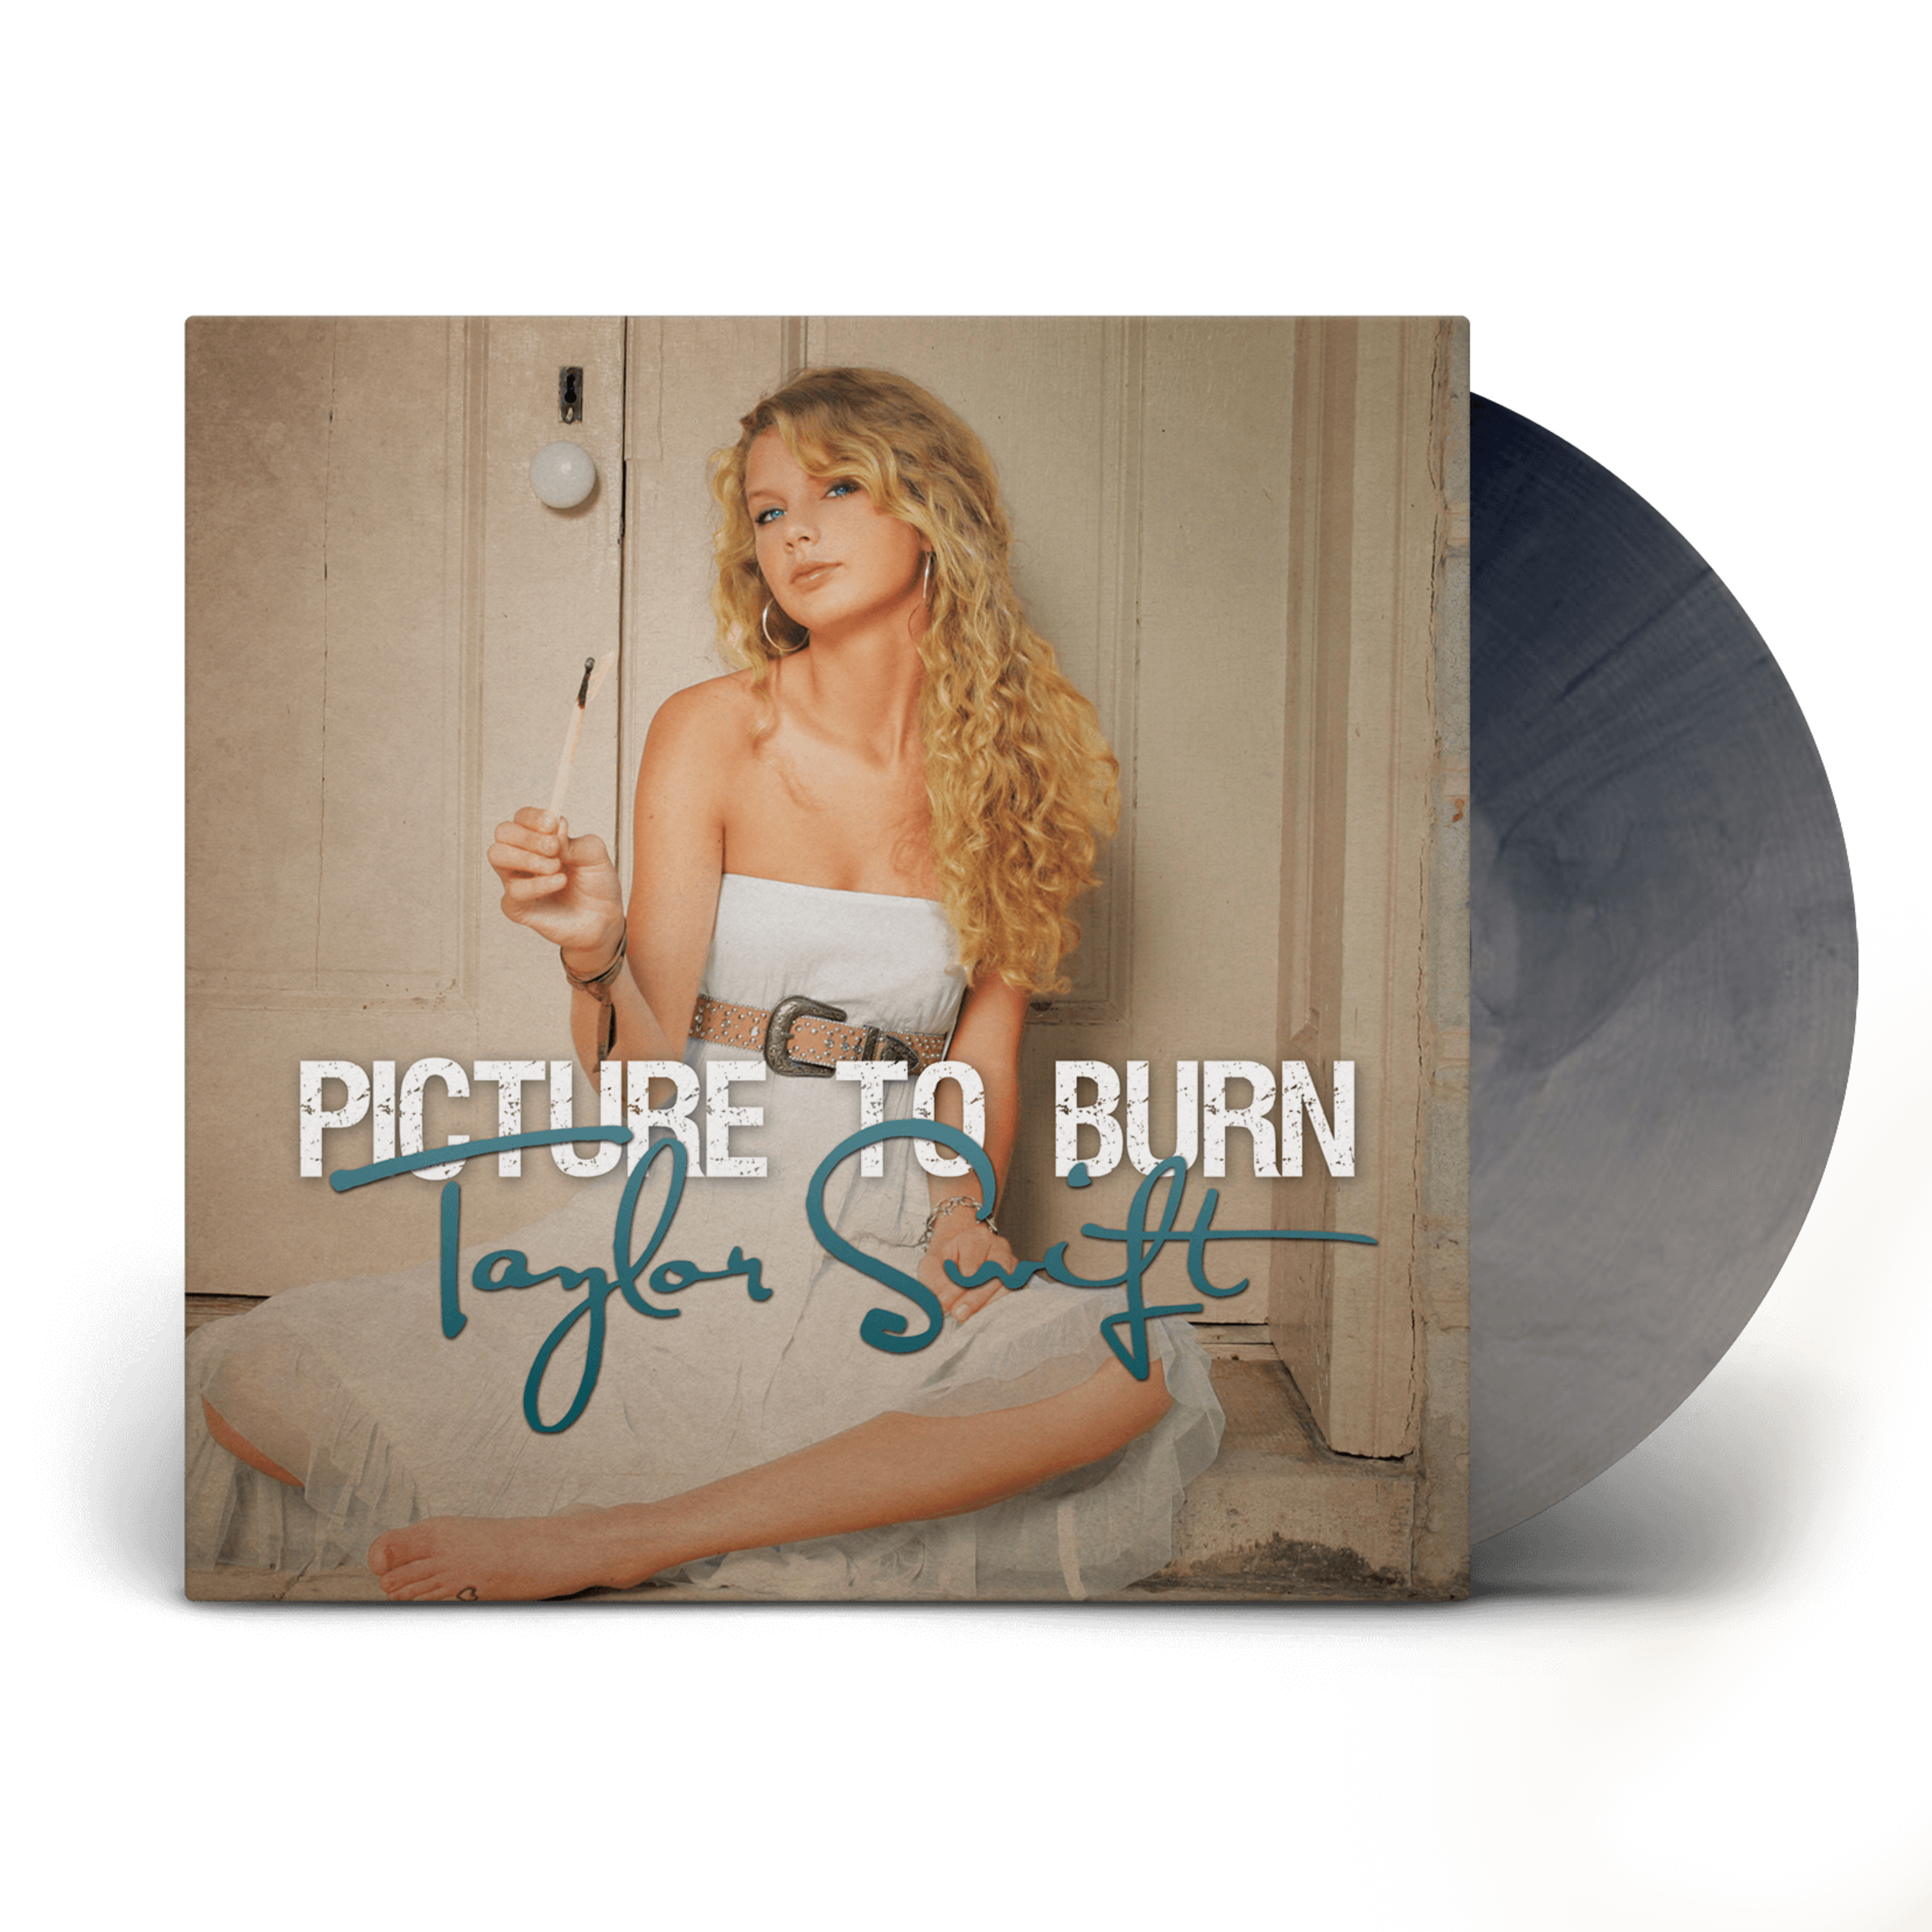 https://store.universal-music.de/assets/asset_300x300/Taylor-Swift-Picture-To-Burn-Ltd-7-Vinyl-Single-Vinyl-131867-293864-1663353040.png